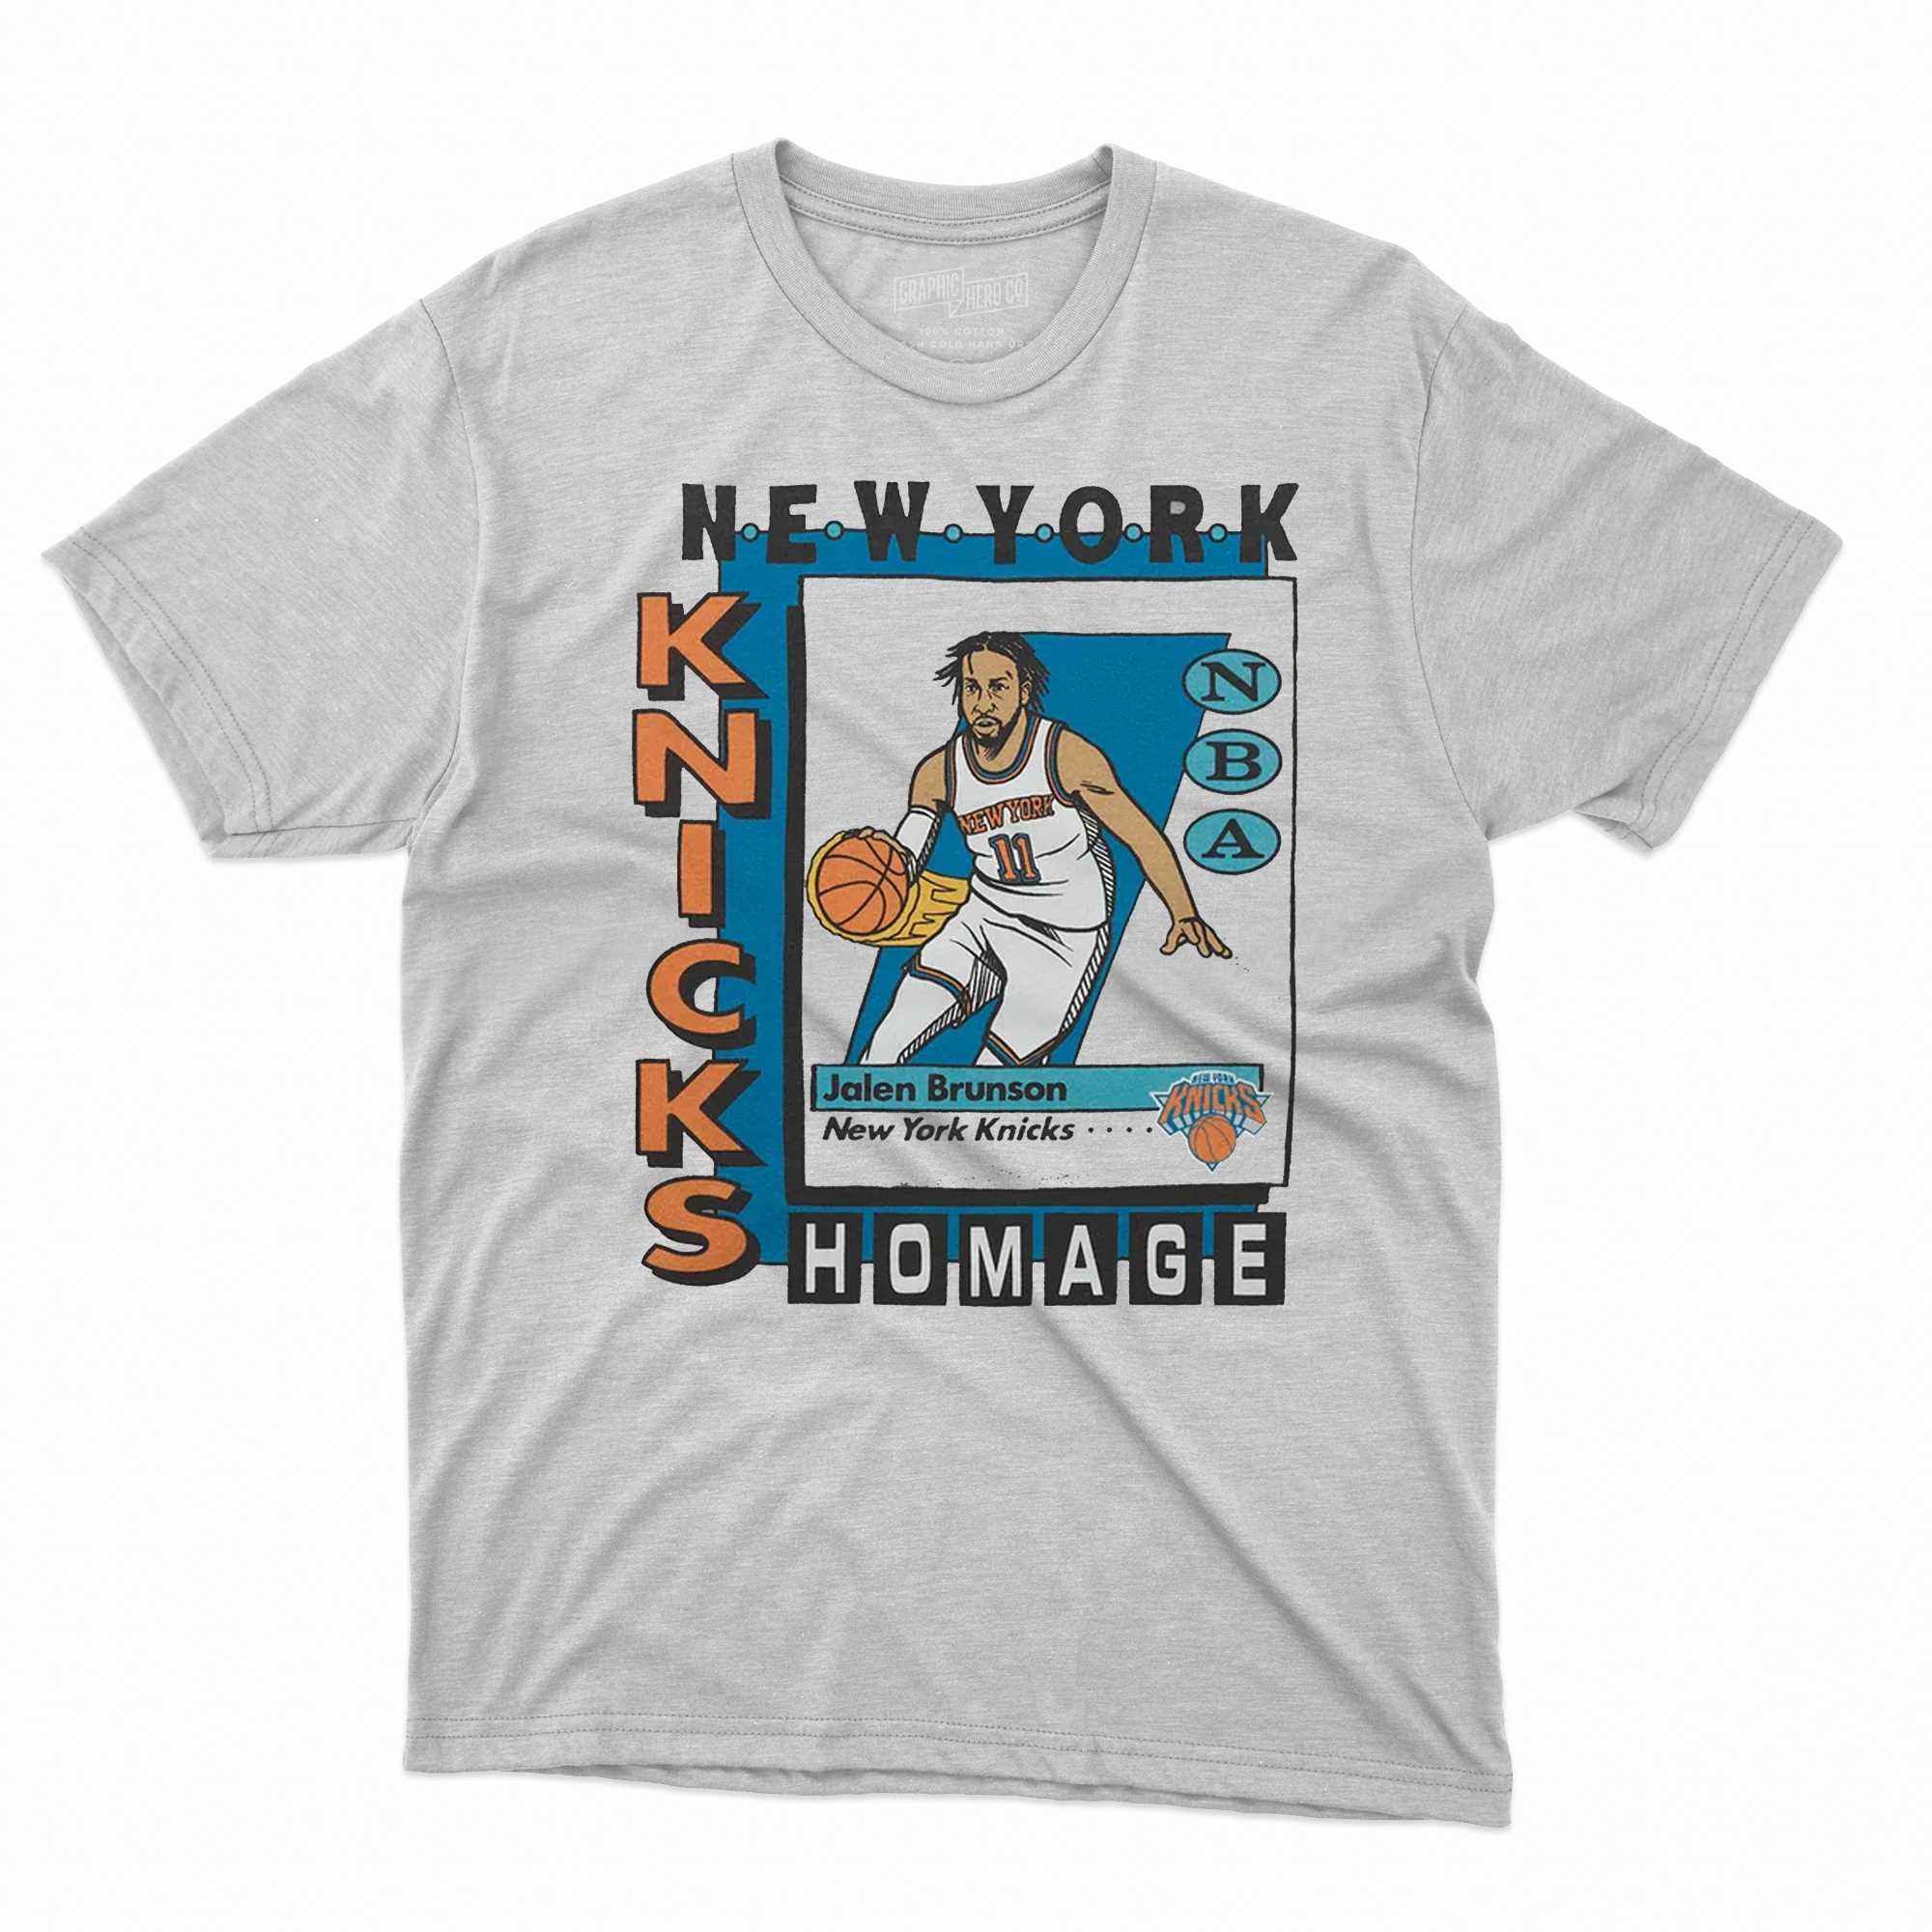 Knicks: Should New York explore a trade for Jalen Brunson?